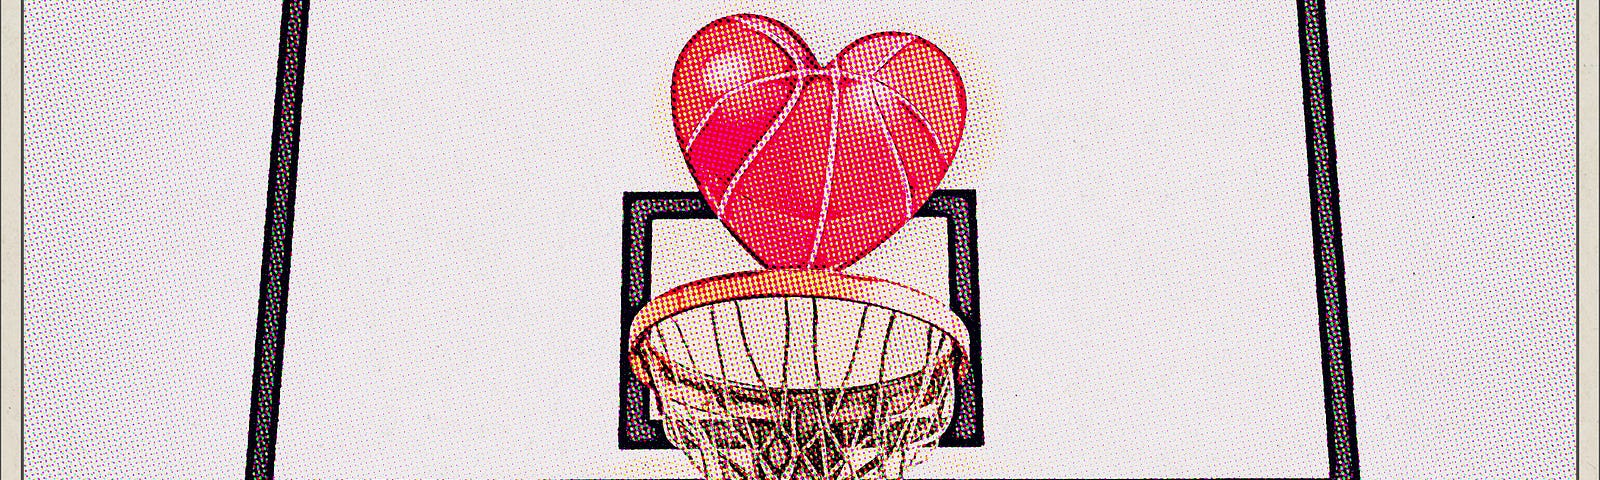 Heart shaped basketball and hoop